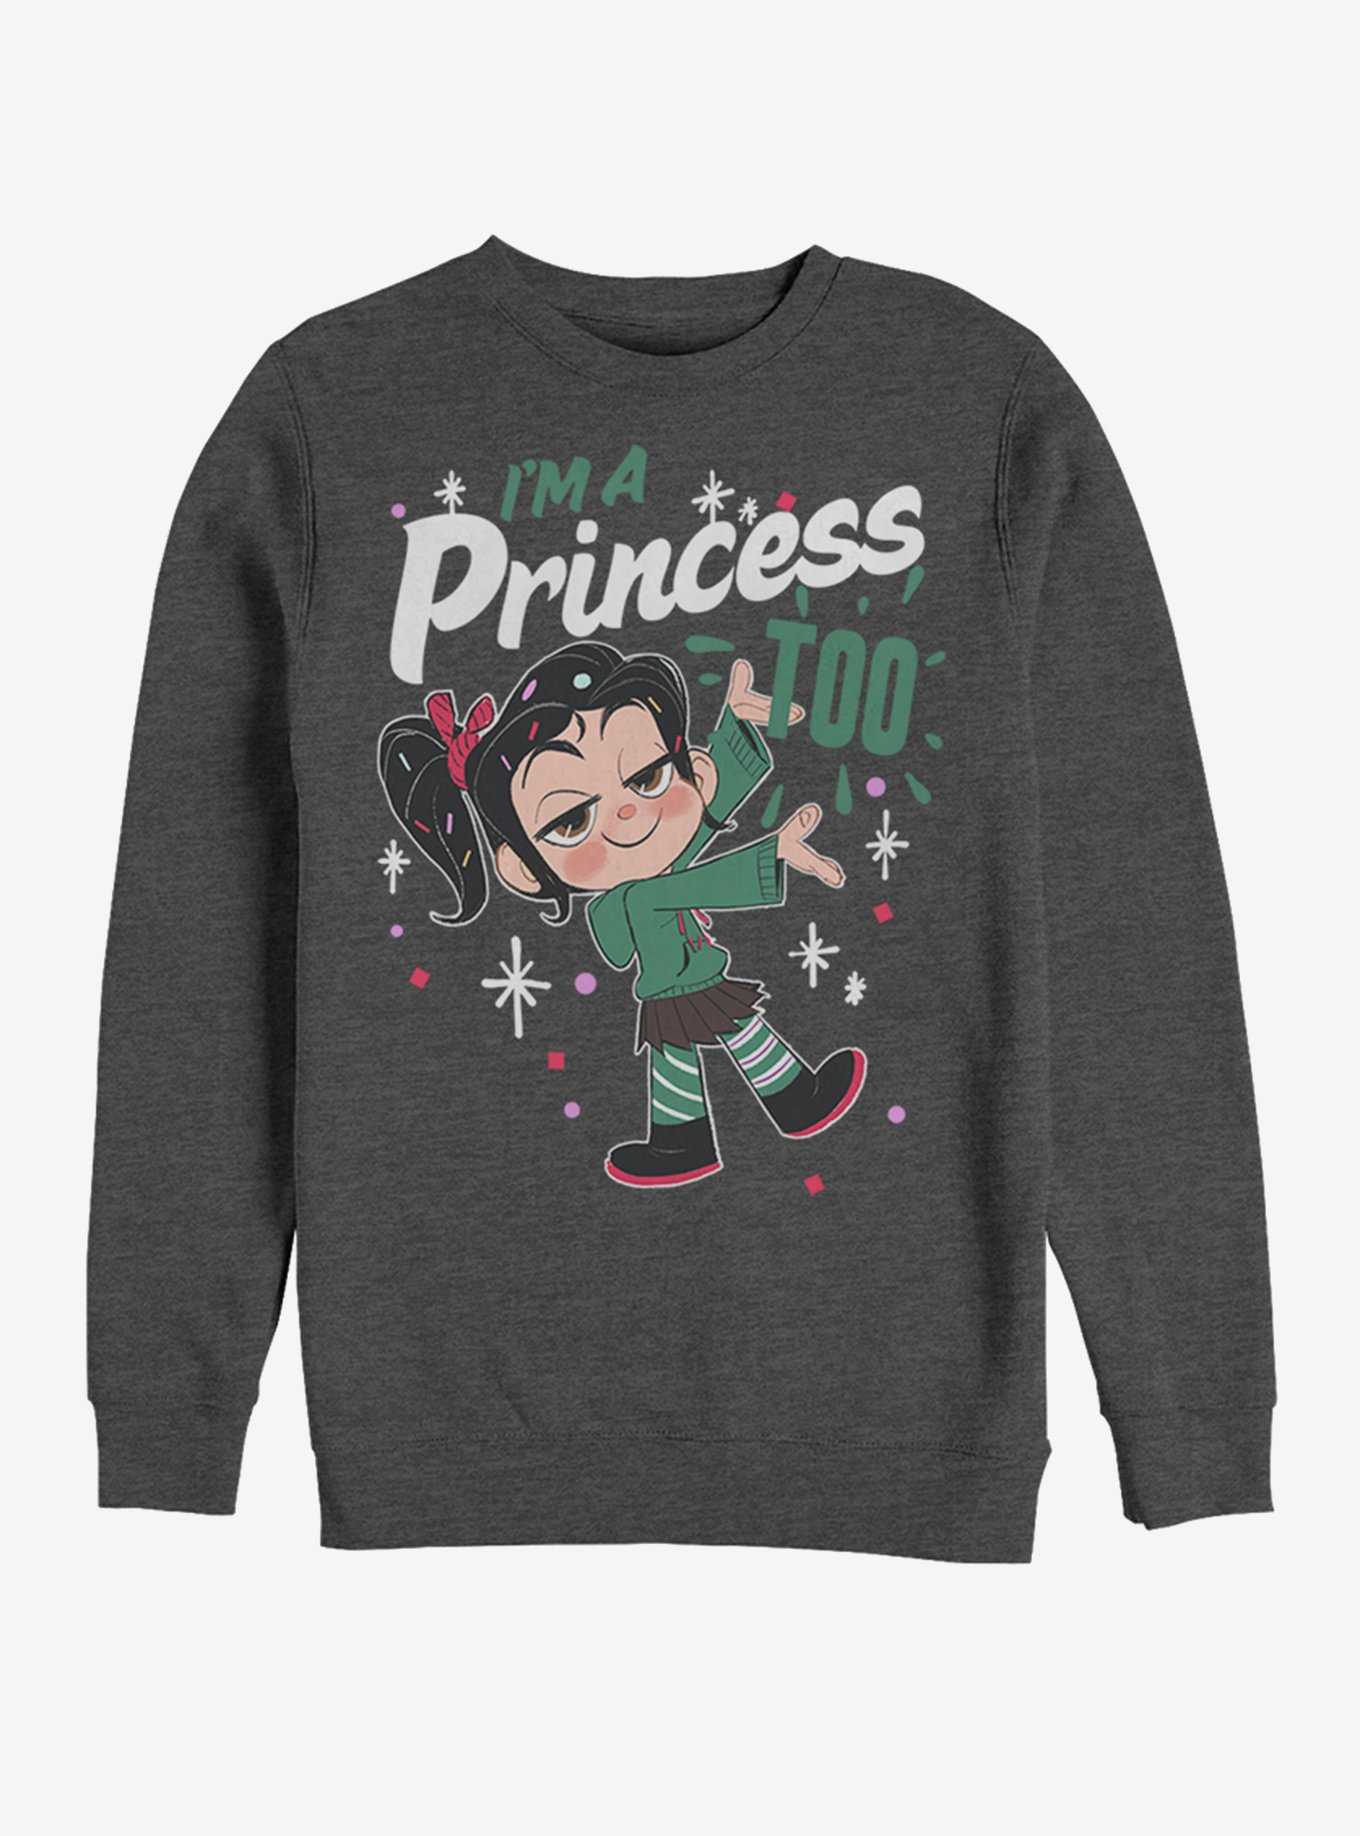 Disney Wreck-It Ralph Princess Too Sweatshirt, , hi-res